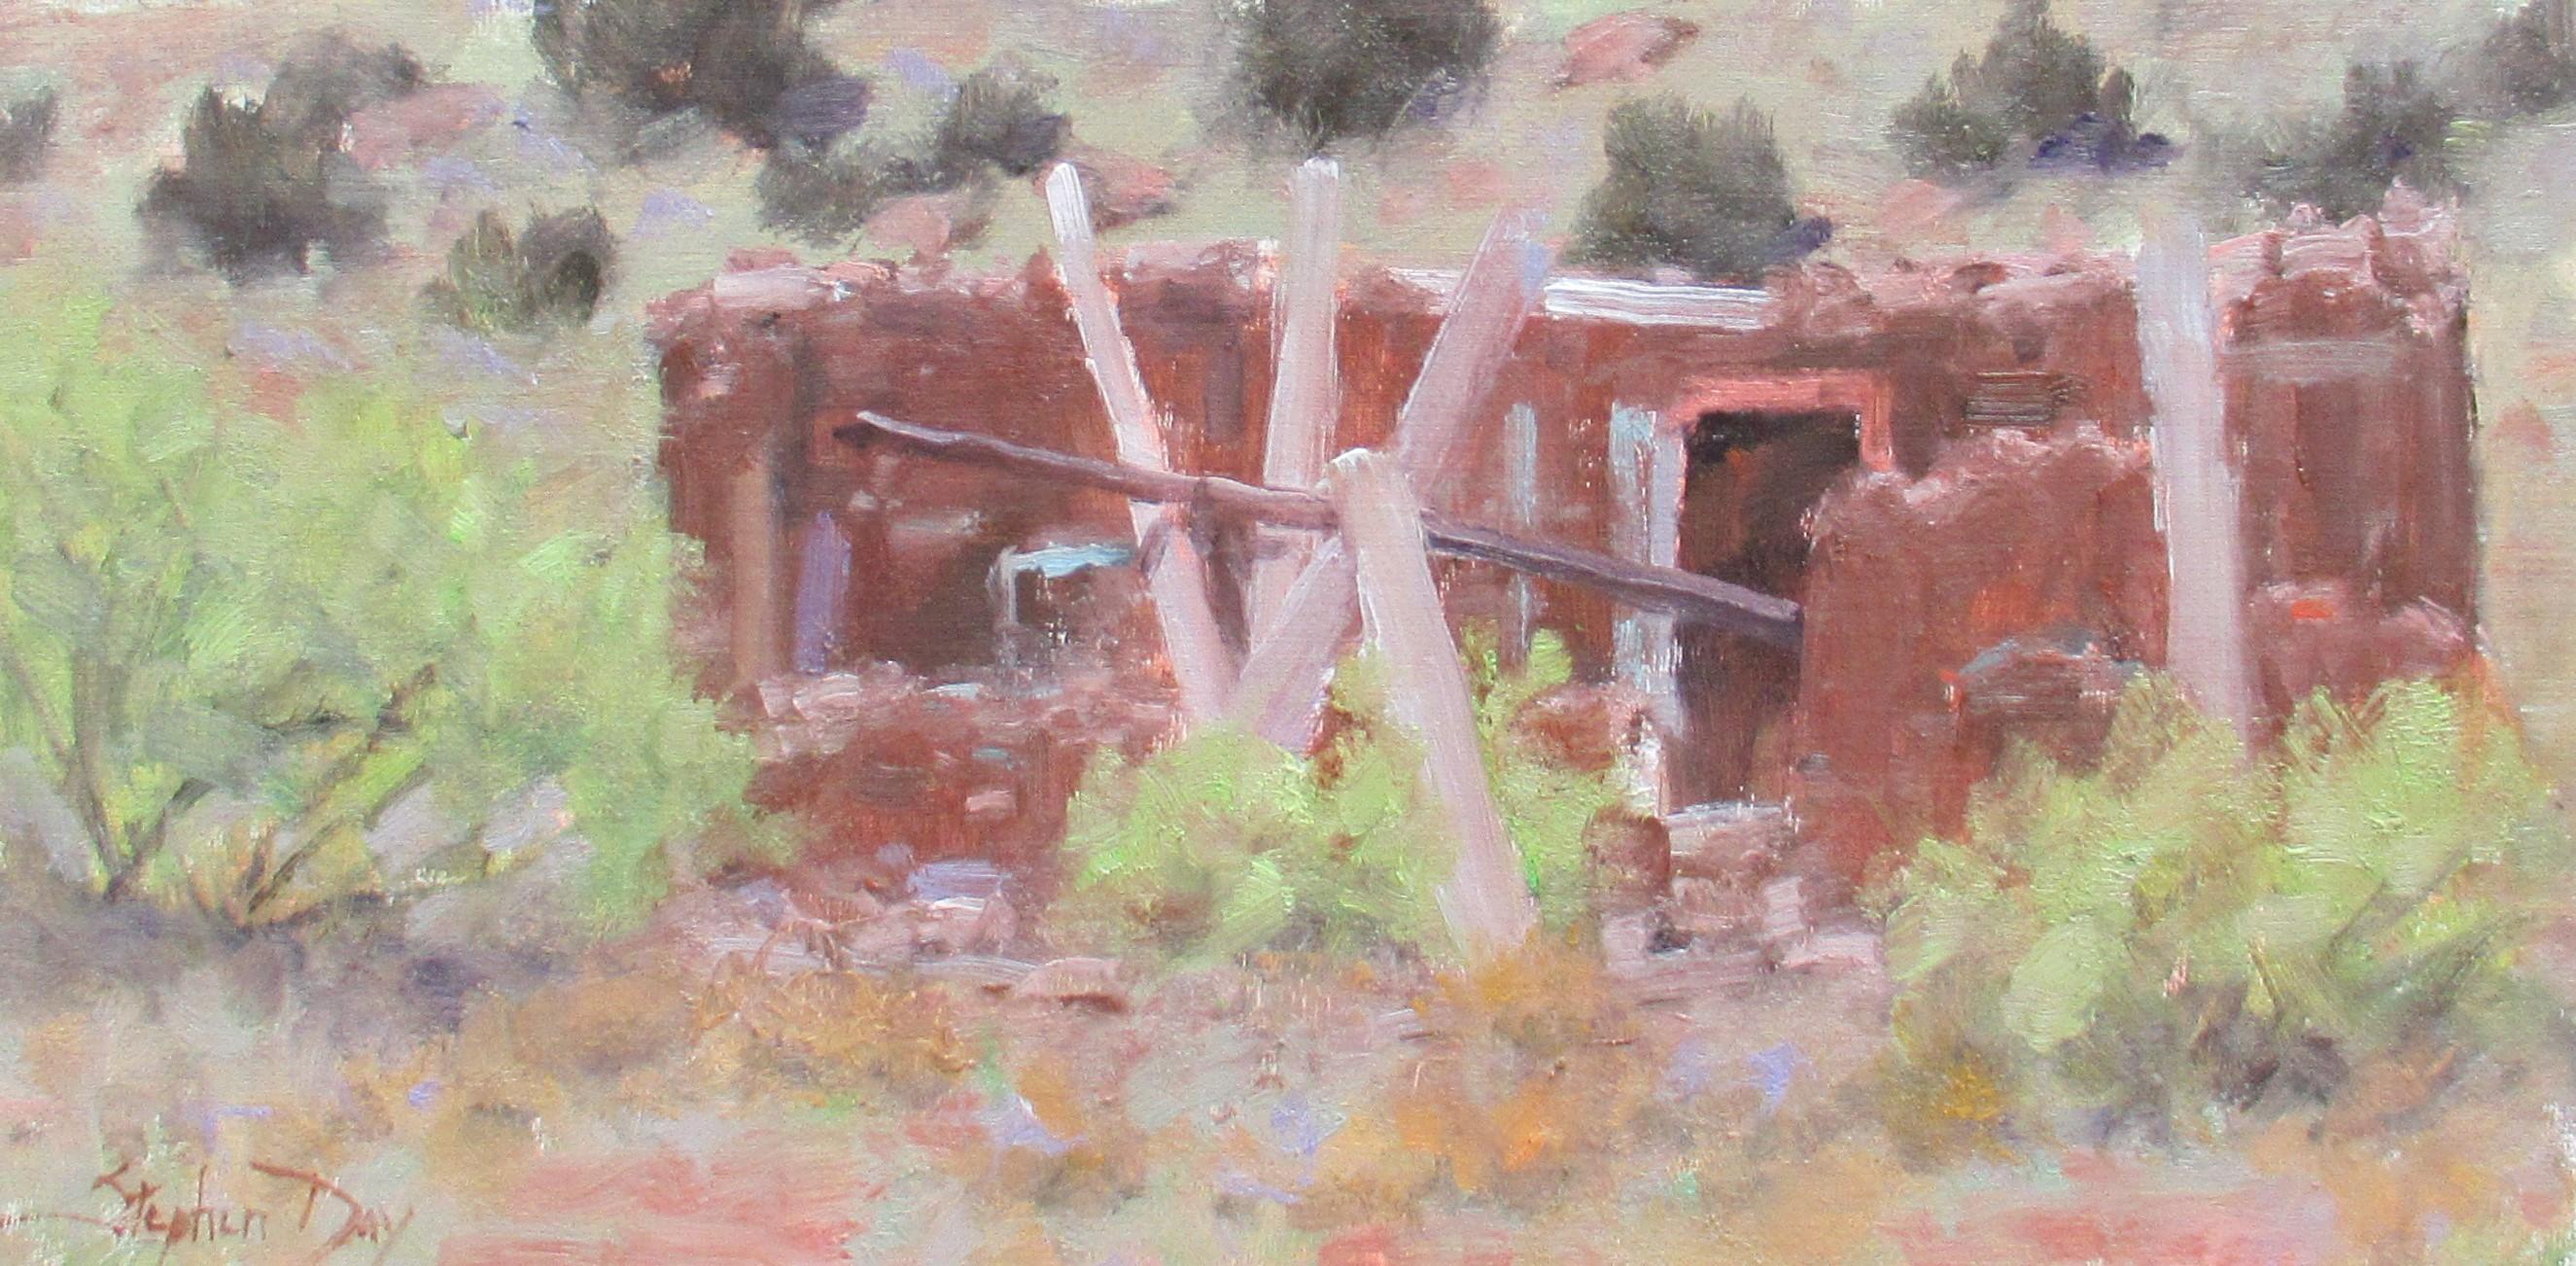 Stephen Day Figurative Painting – ""Adobe Ruin - New Mexico" Ölgemälde